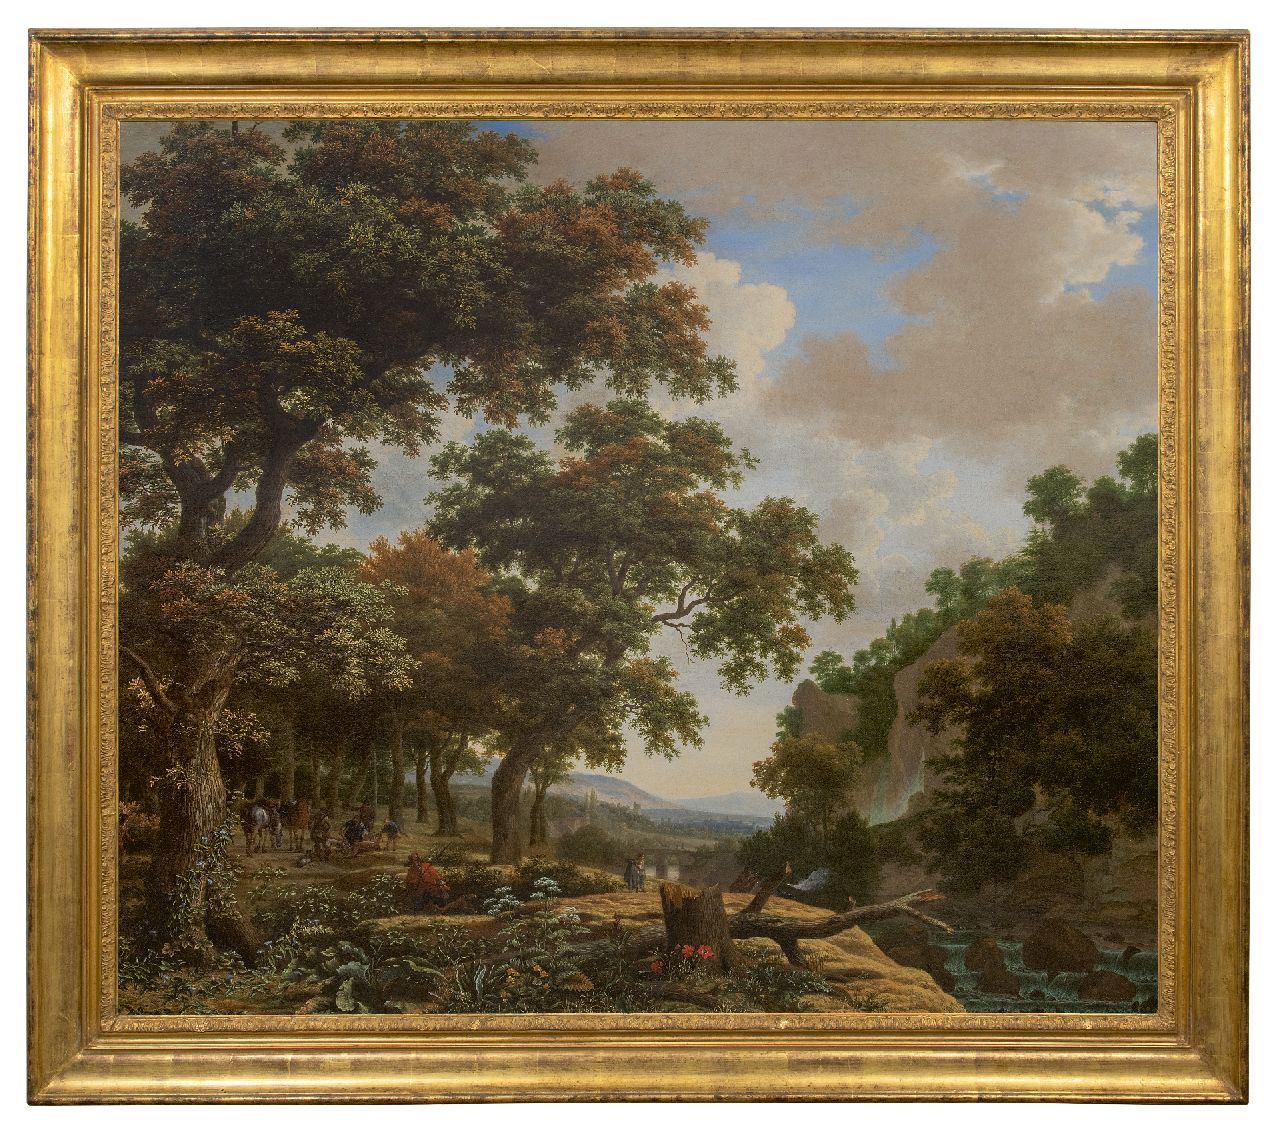 Haagen J. van der | Joris van der Haagen | Paintings offered for sale | Italianate hilly landscape with hunters, oil on canvas 132.5 x 150.5 cm